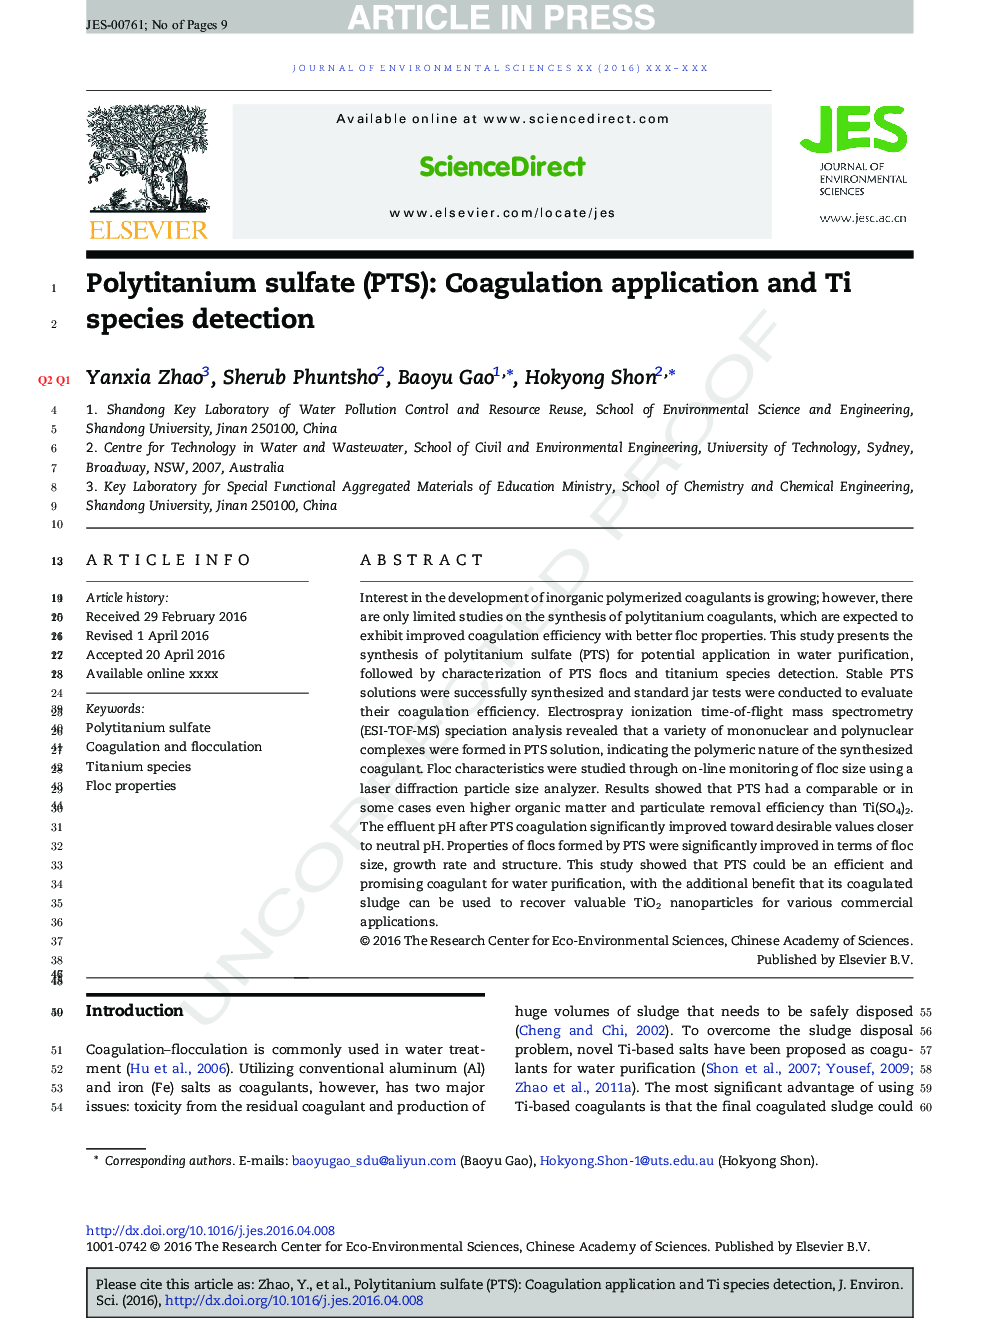 Polytitanium sulfate (PTS): Coagulation application and Ti species detection